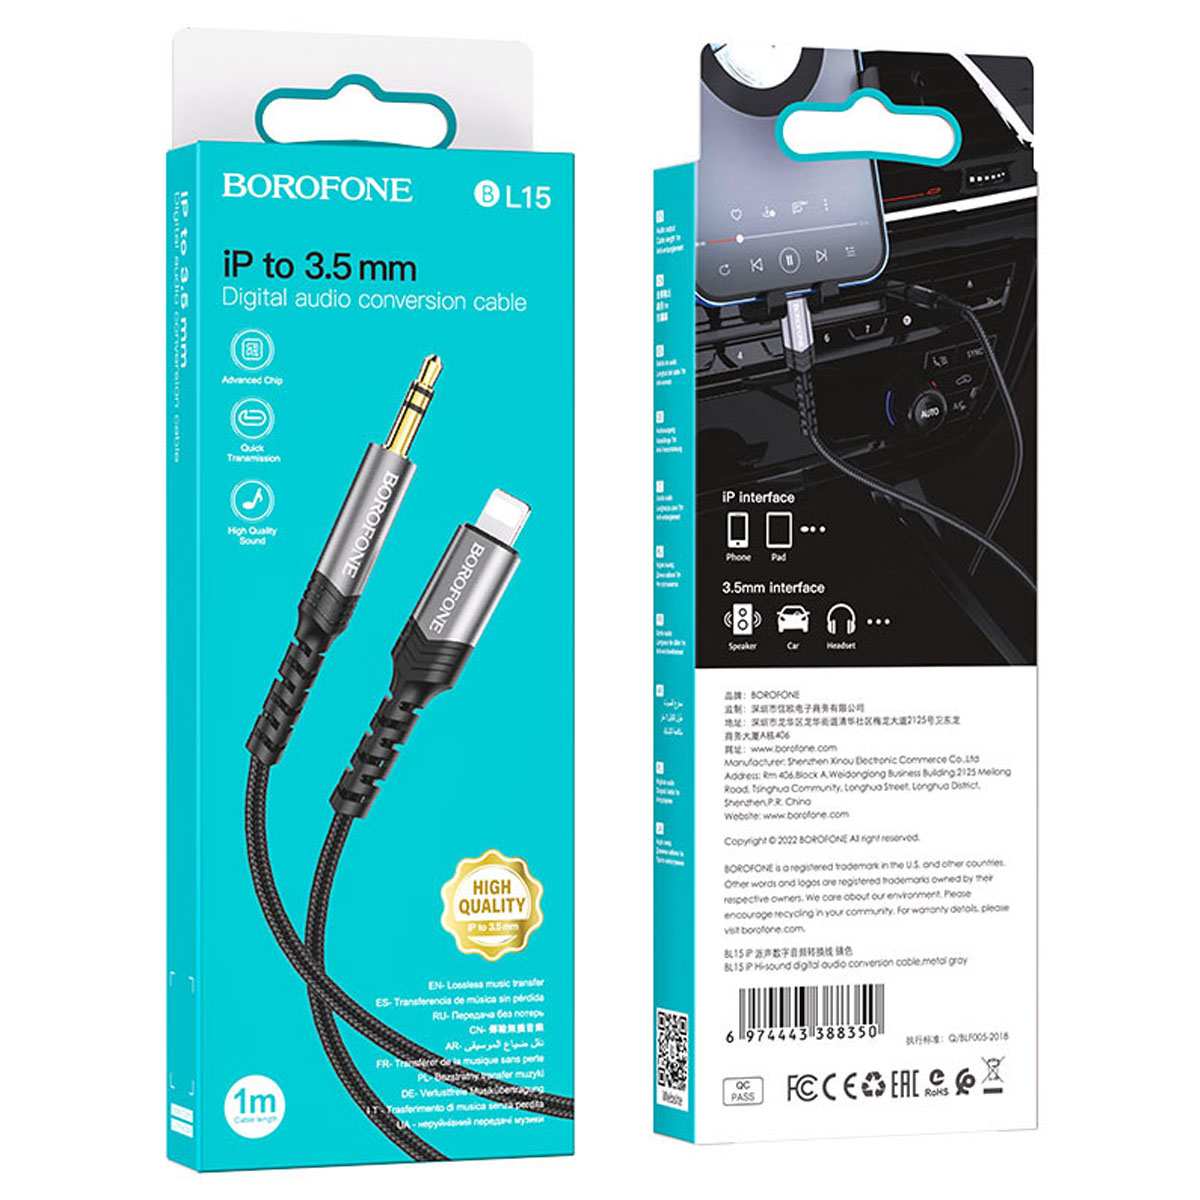 Аудио кабель, переходник BOROFONE BL15 Lightning 8-pin на AUX Jack 3.5 mm, длина 1 метр, цвет черно серебристый